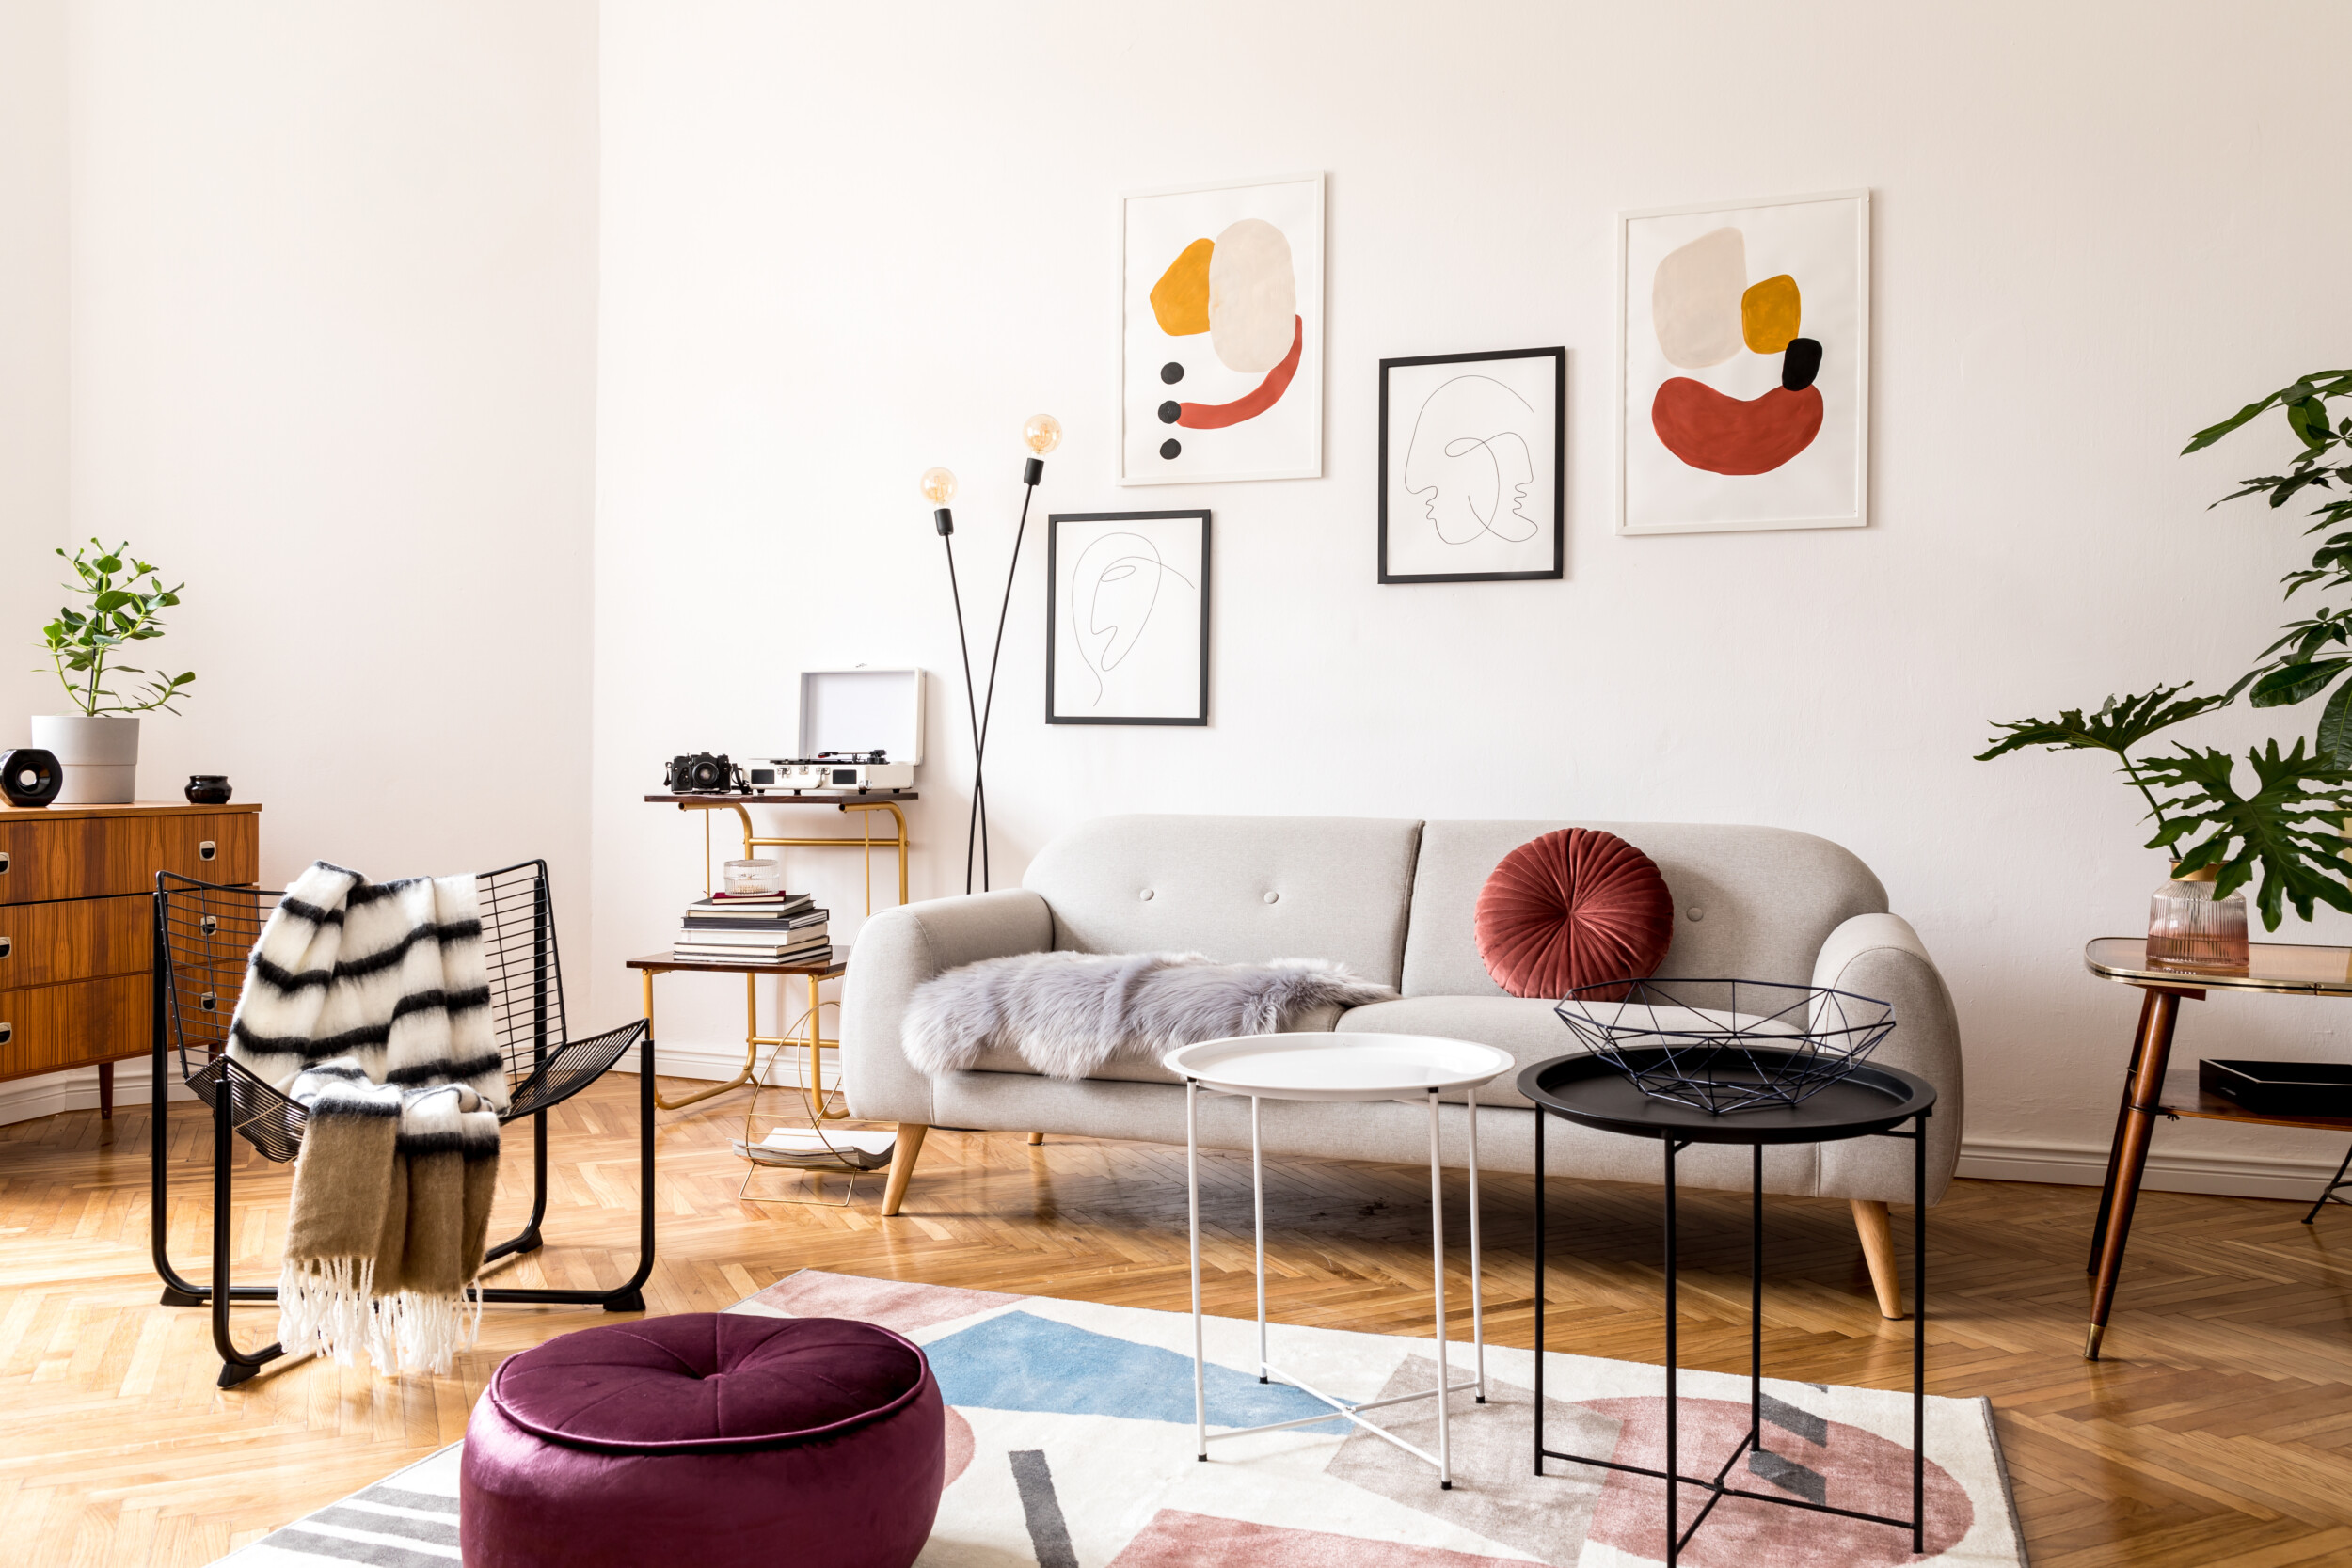 Inspiration  5 Interior Design Tips For a Contemporary Zen Style Home -  Magazine India